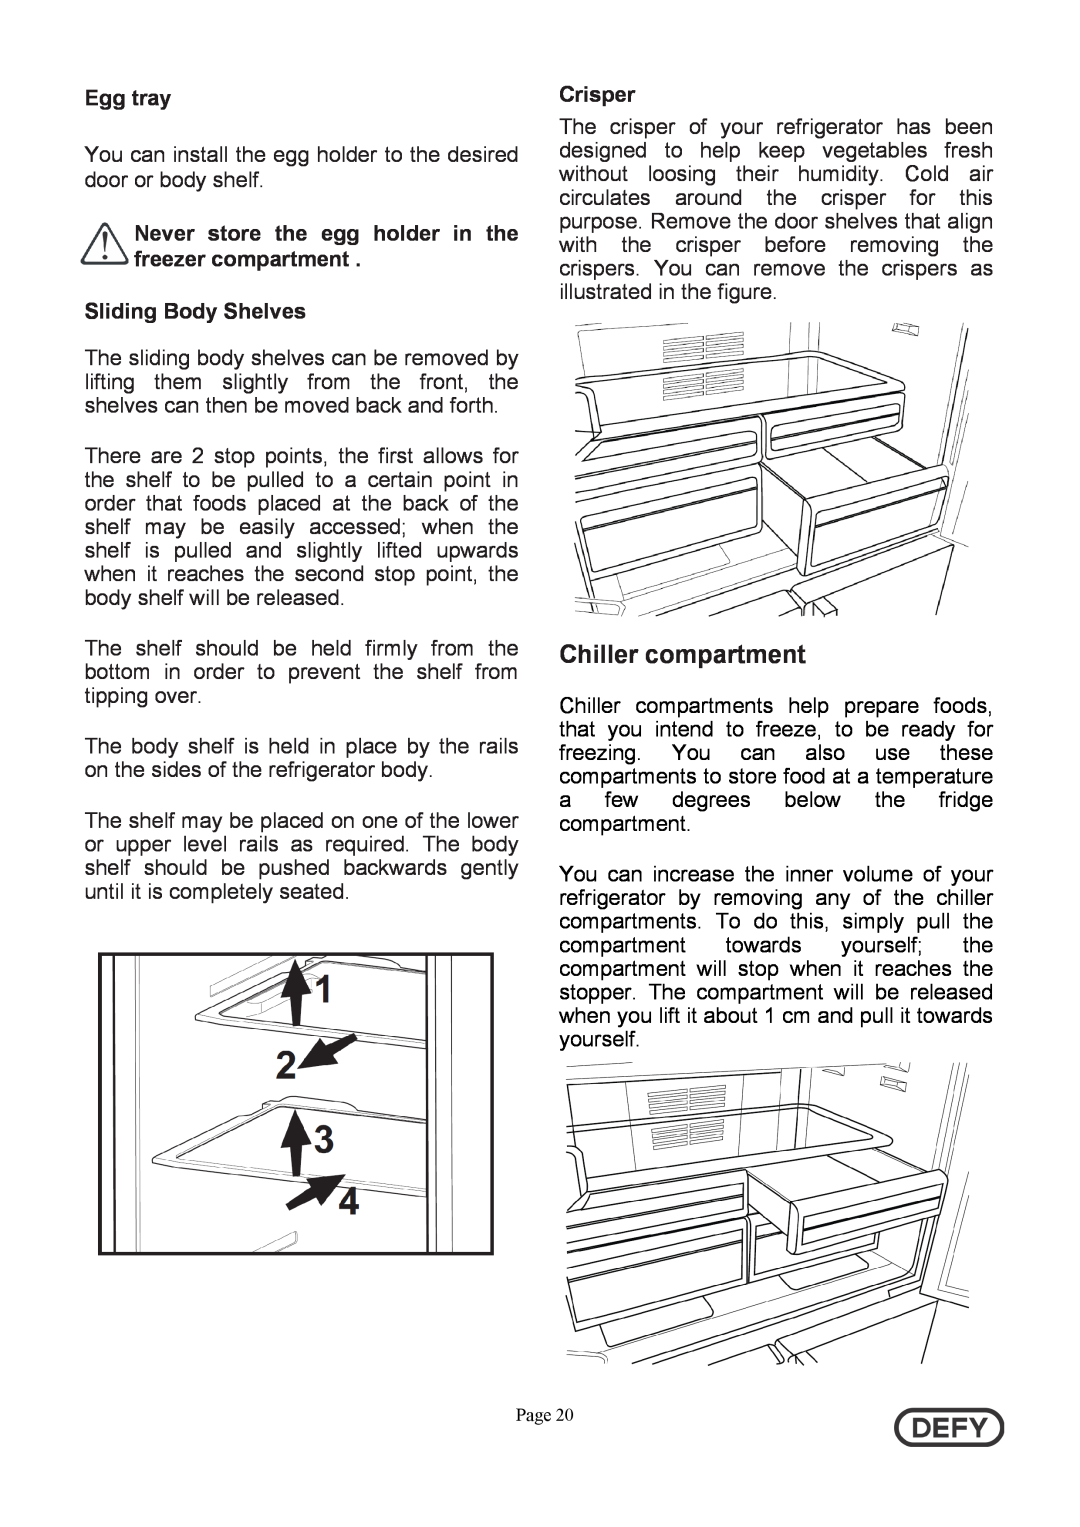 Defy Appliances DFF399 instruction manual Chiller compartment, Egg tray, Sliding Body Shelves, Crisper 